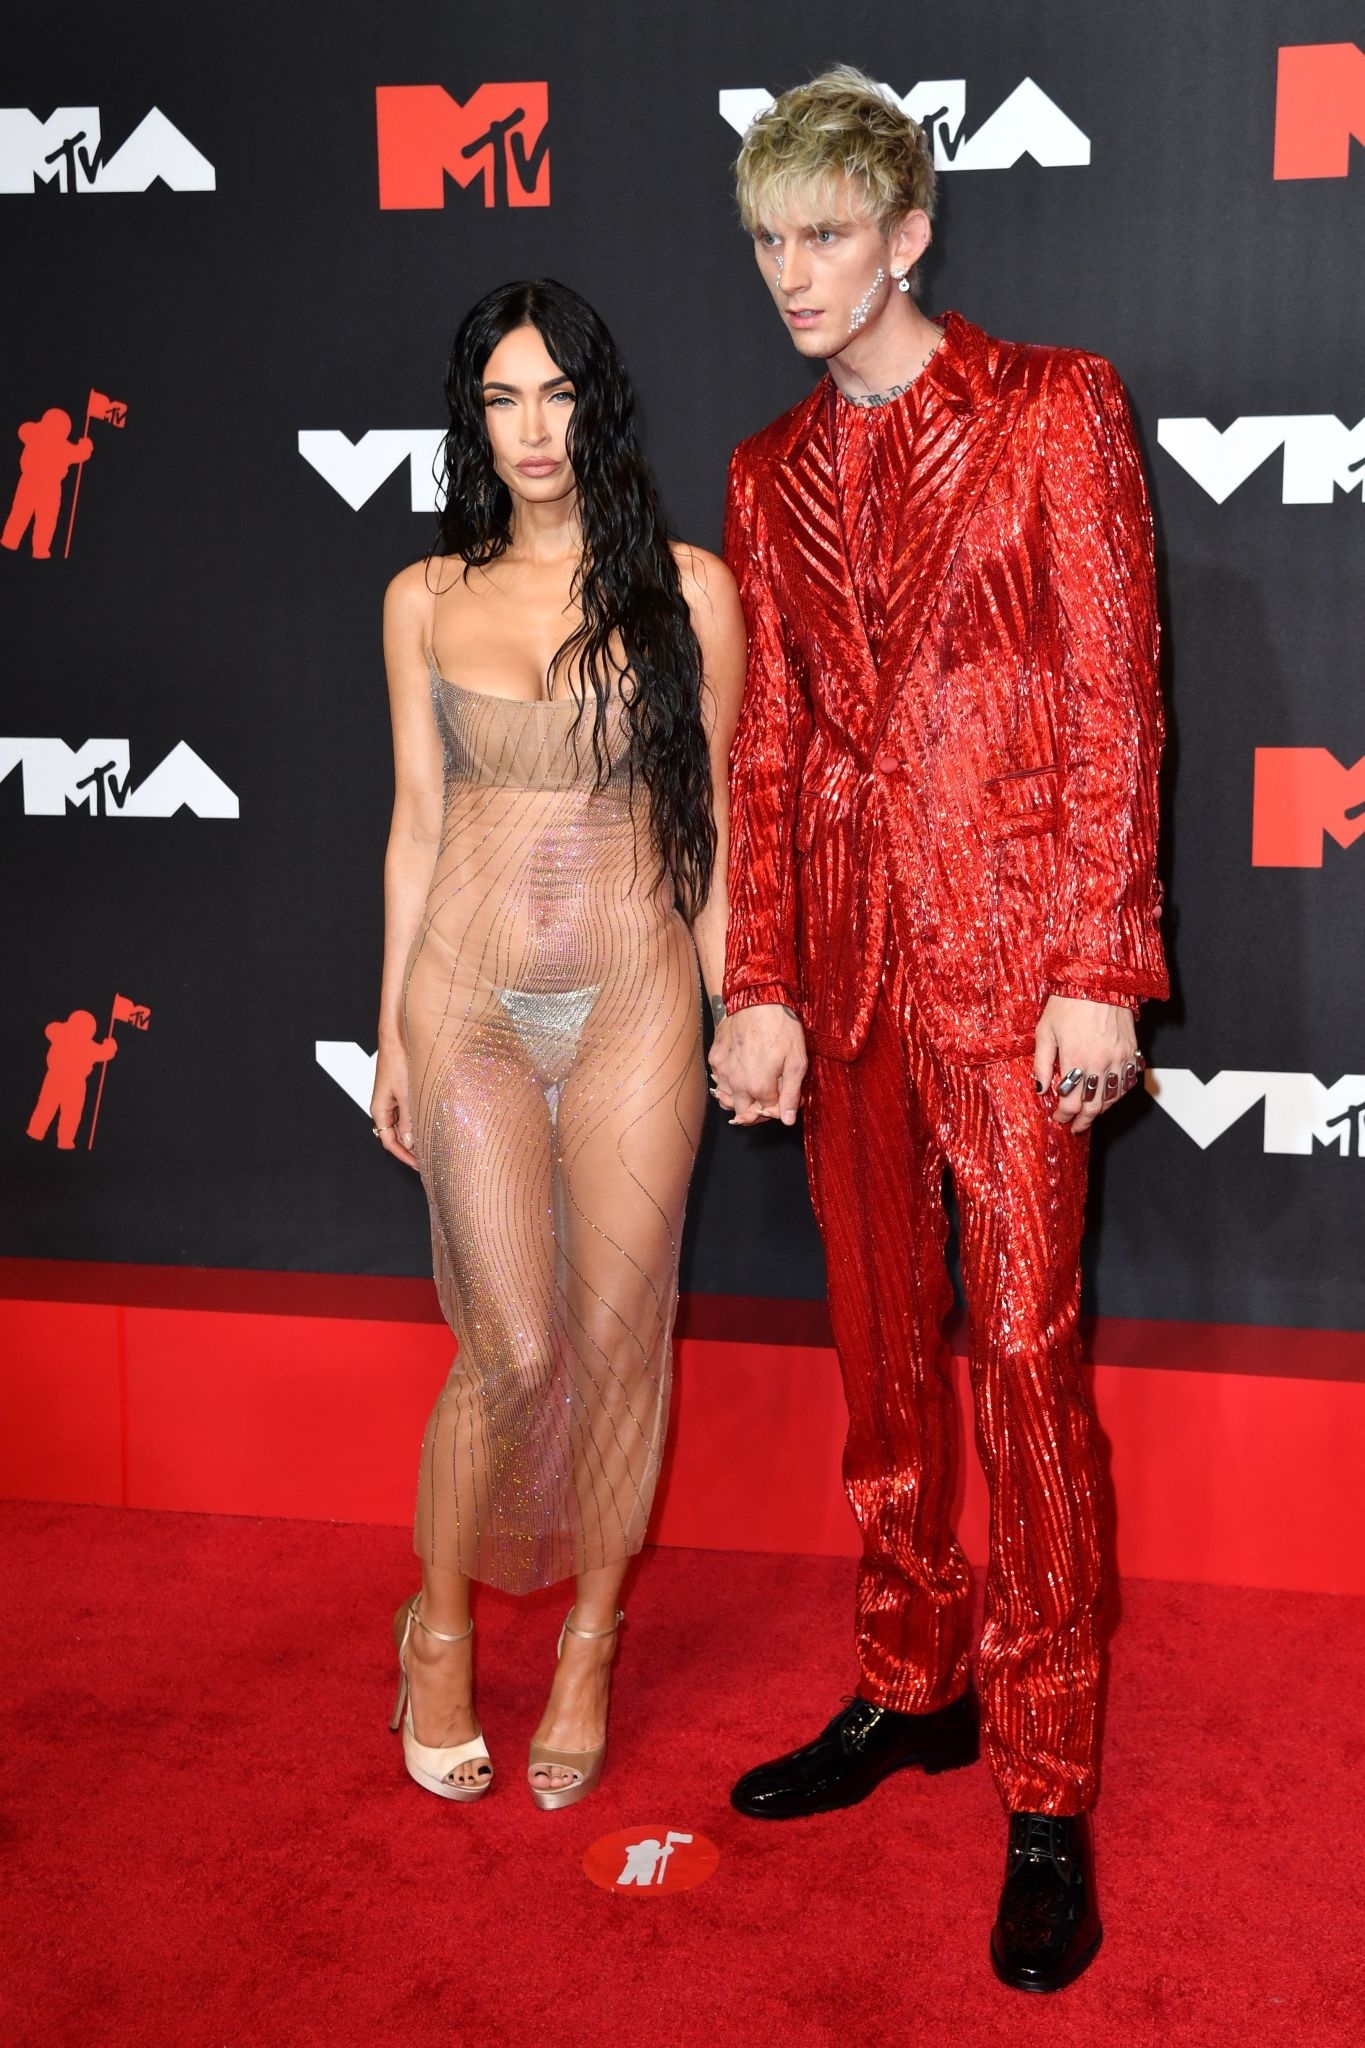 Megan Fox in bold see-through dress for 2021 MTV VMAs with Machine Gun Kelly